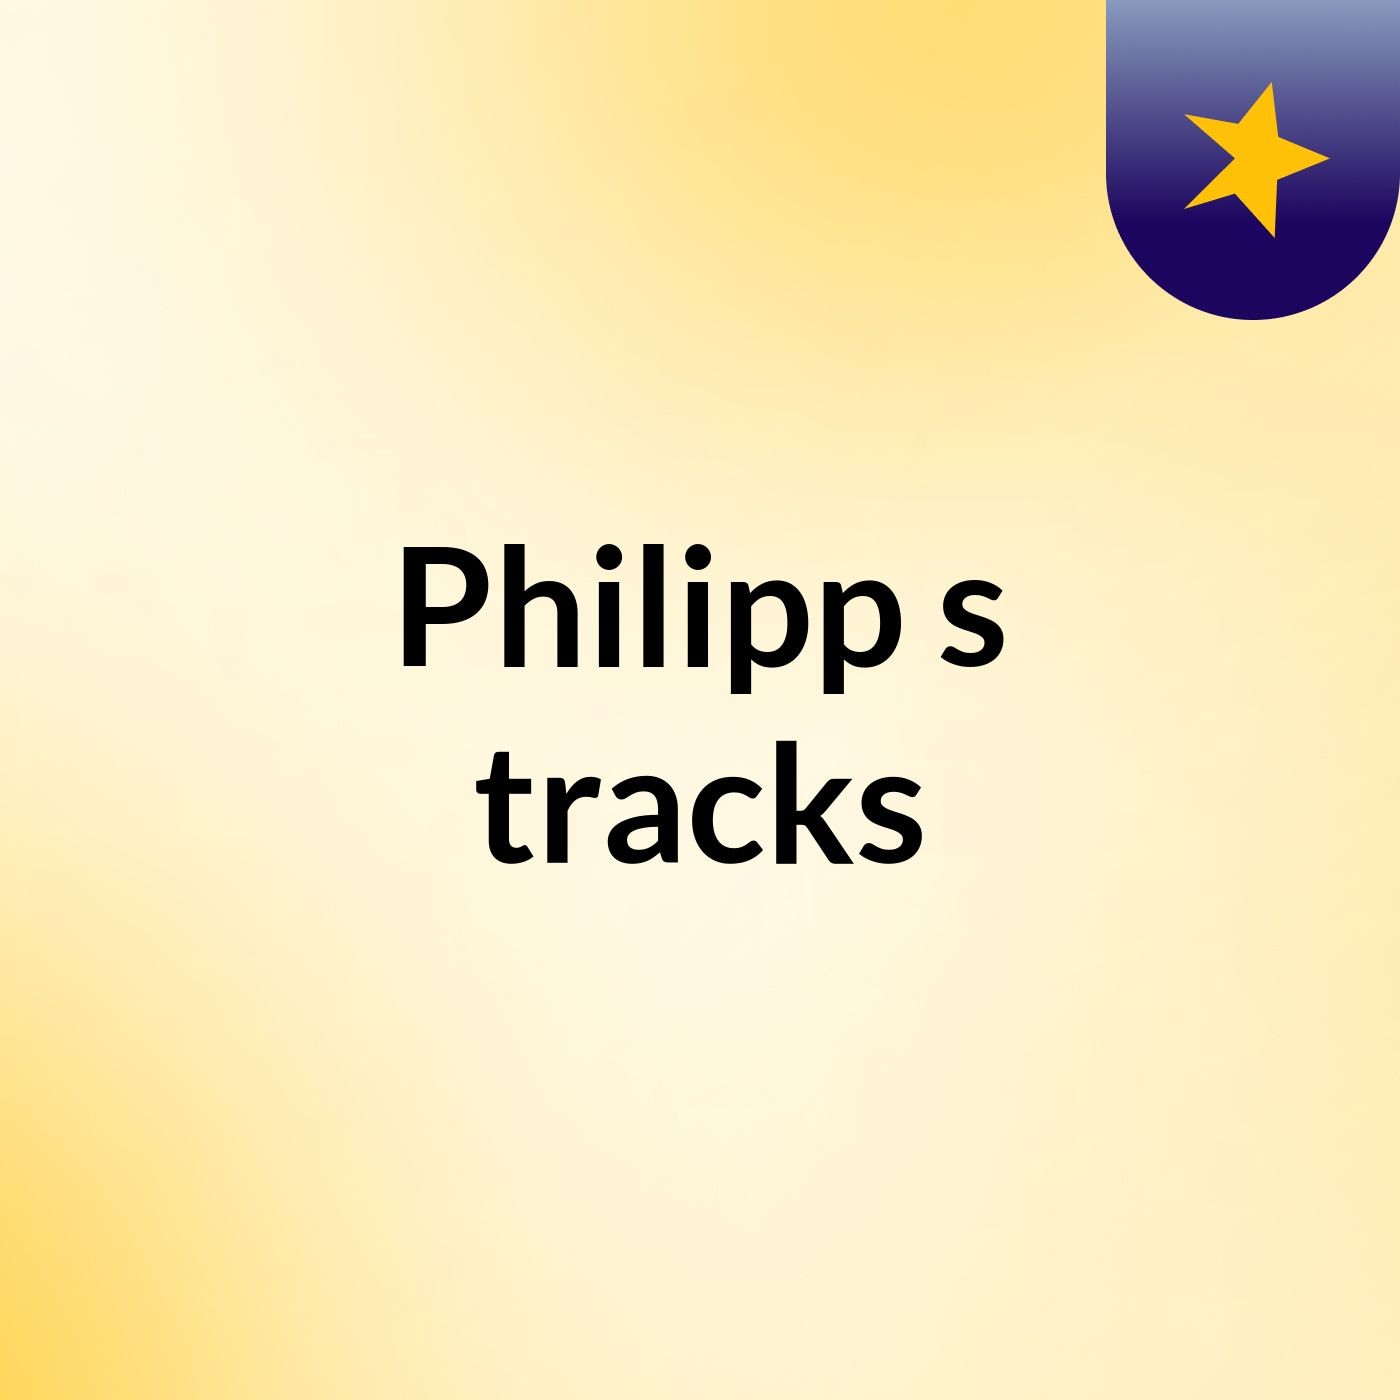 Philipp's tracks